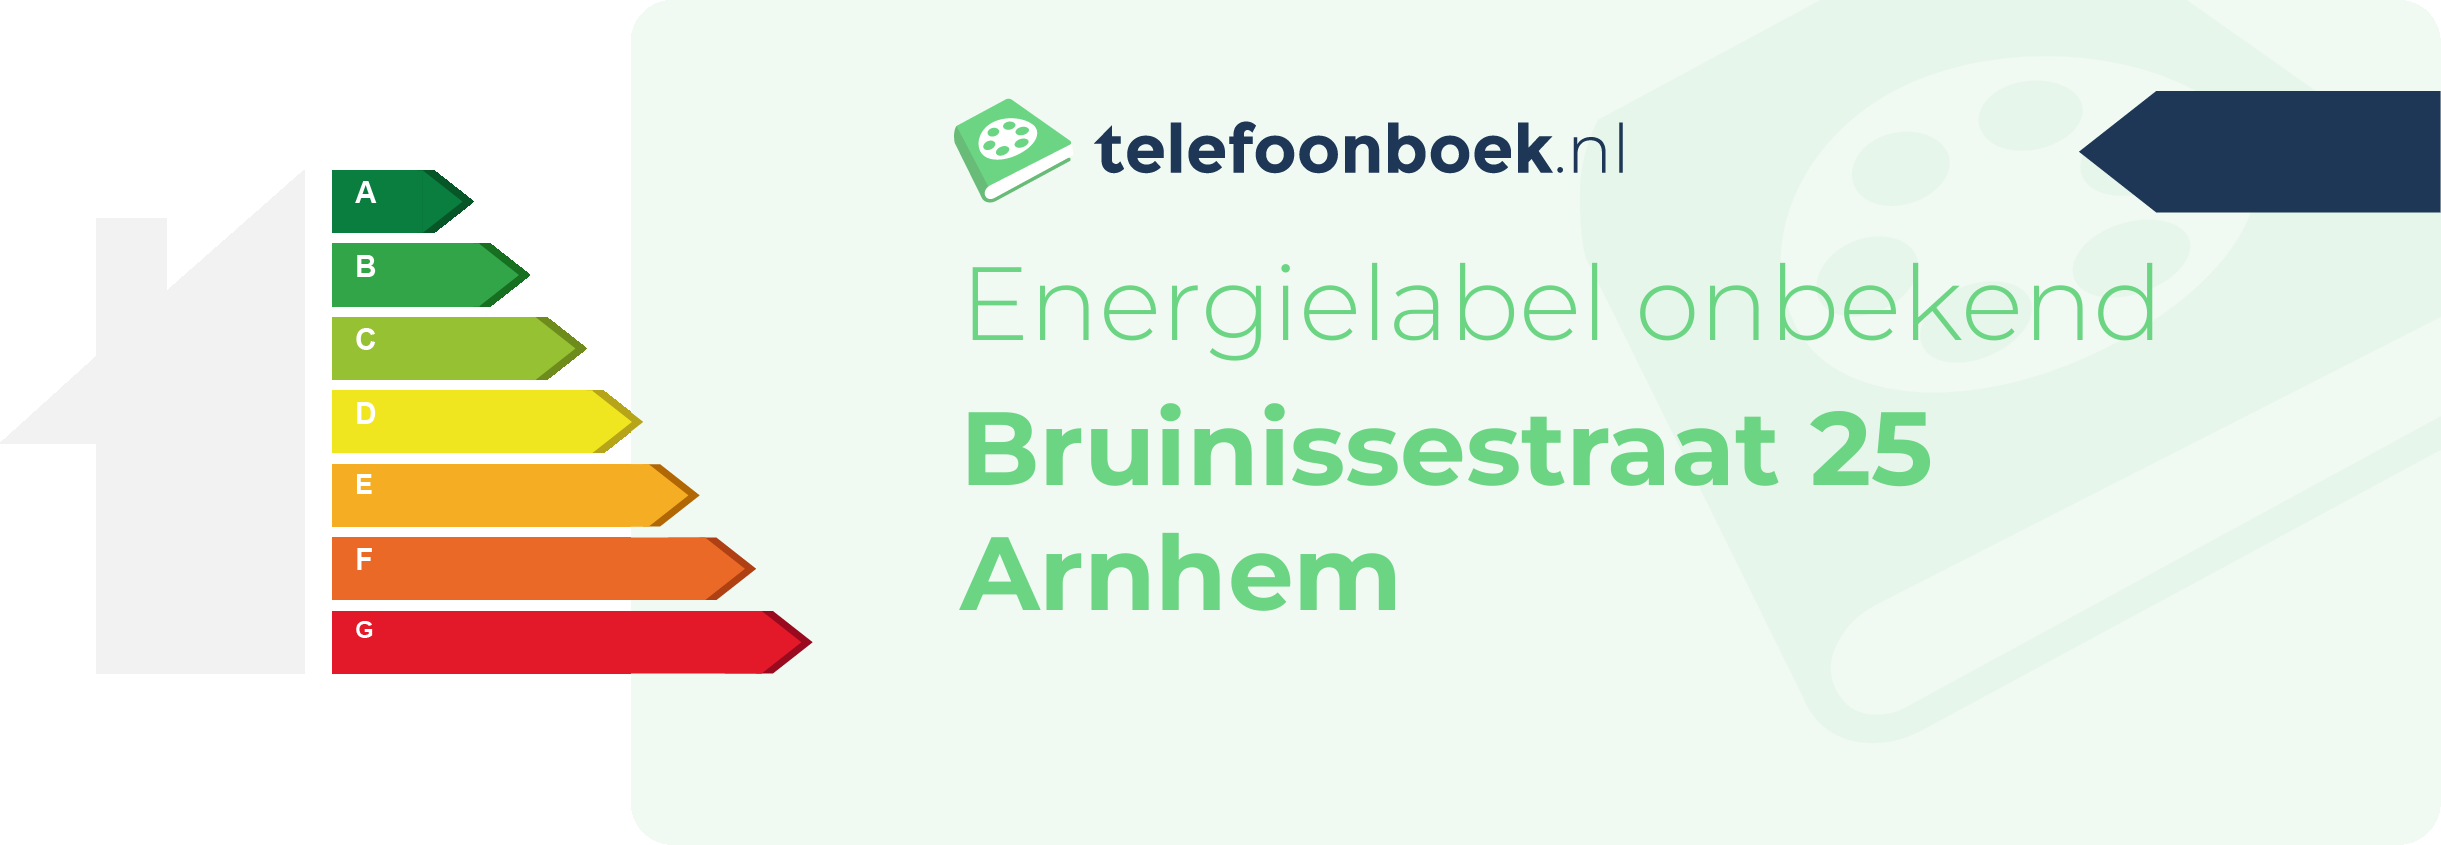 Energielabel Bruinissestraat 25 Arnhem